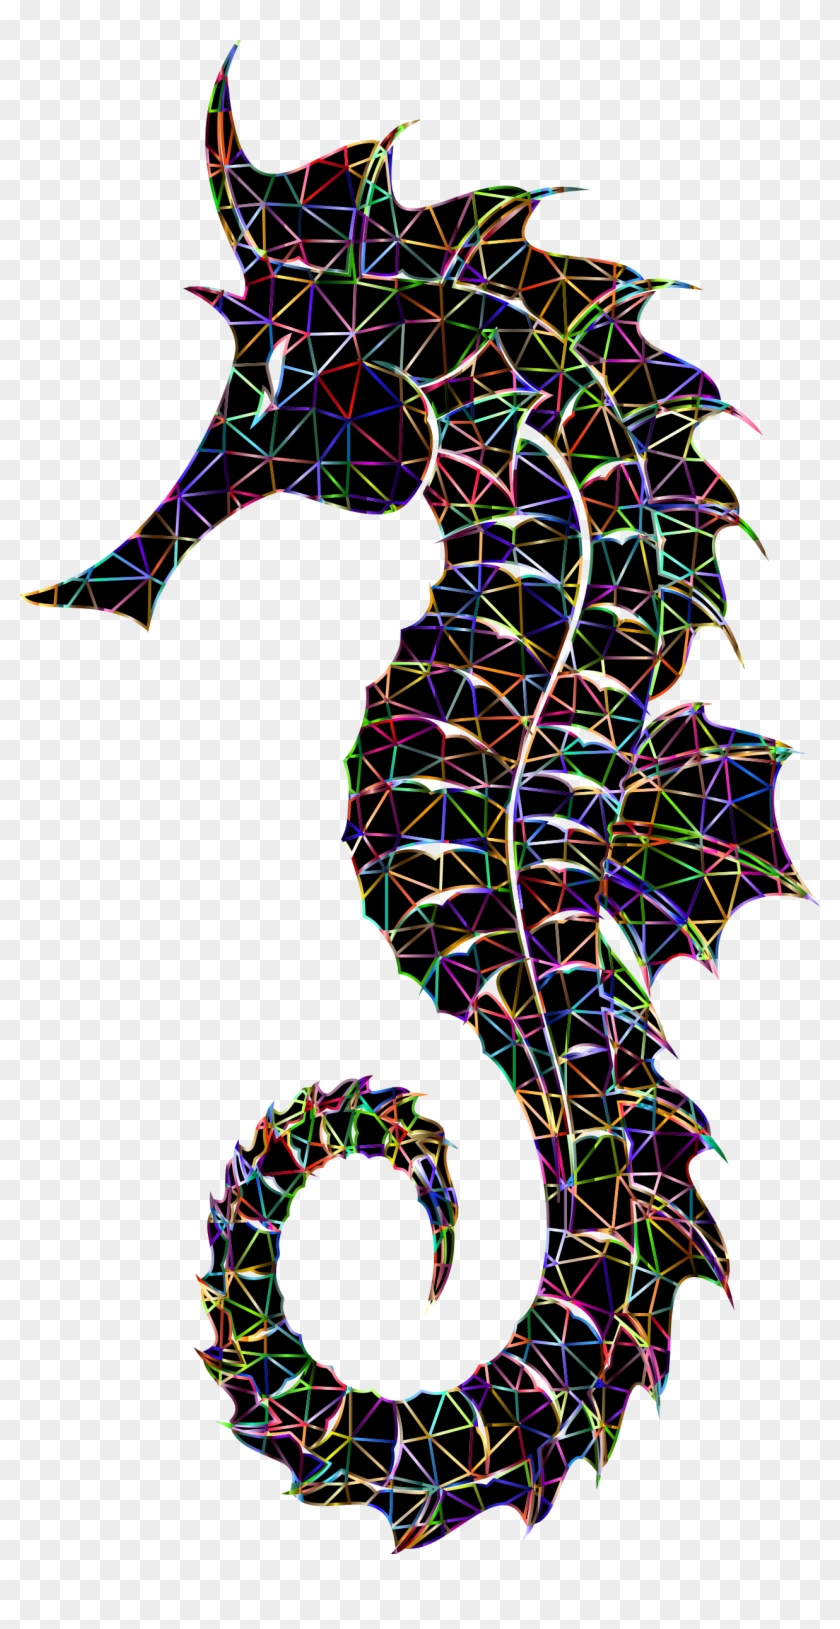 Detailed Seahorse Wireframe - Seahorse Silhouette #628910